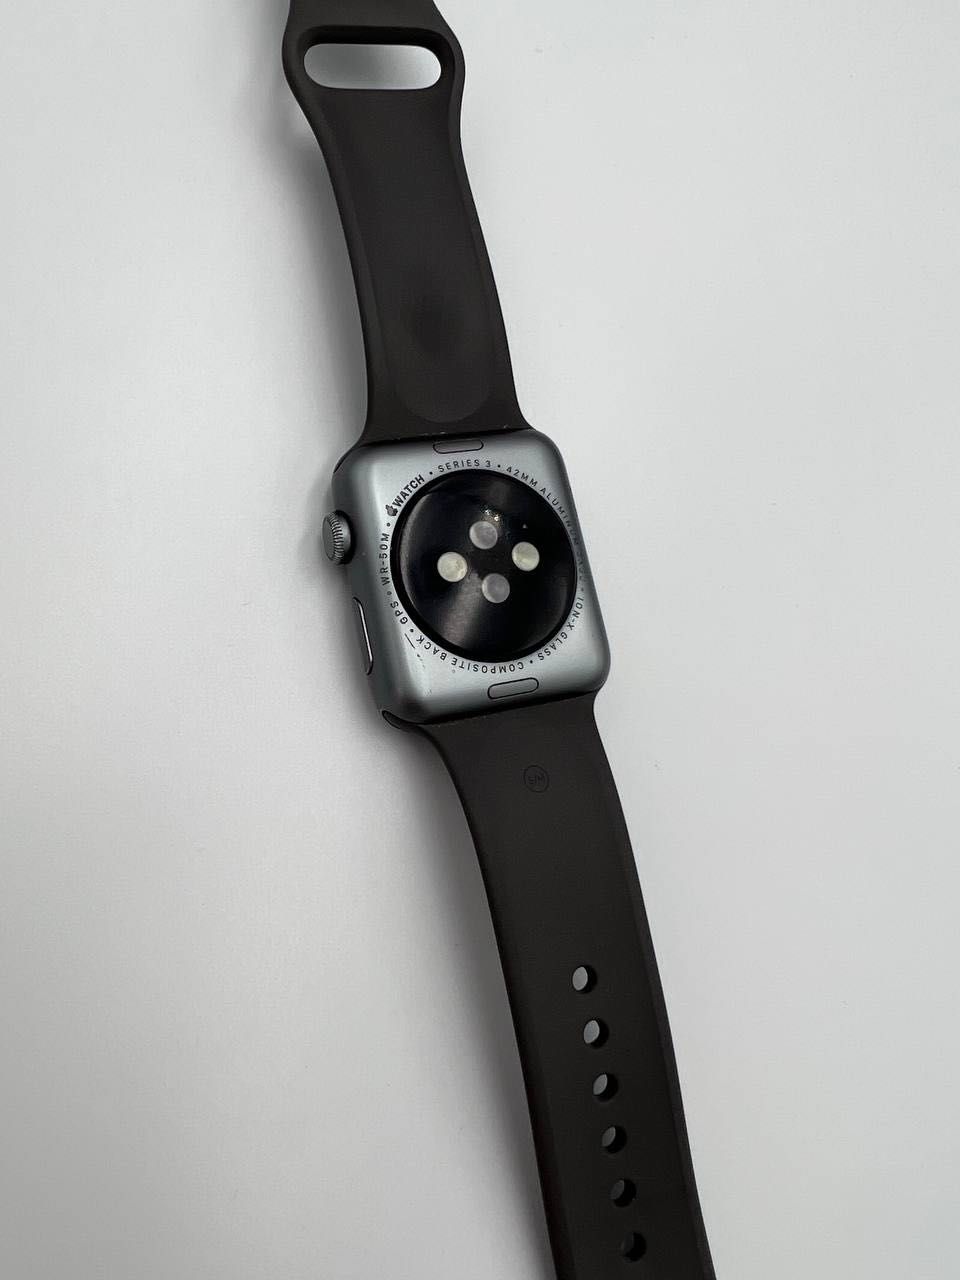 Apple Watch 3.42 Bat: 76%